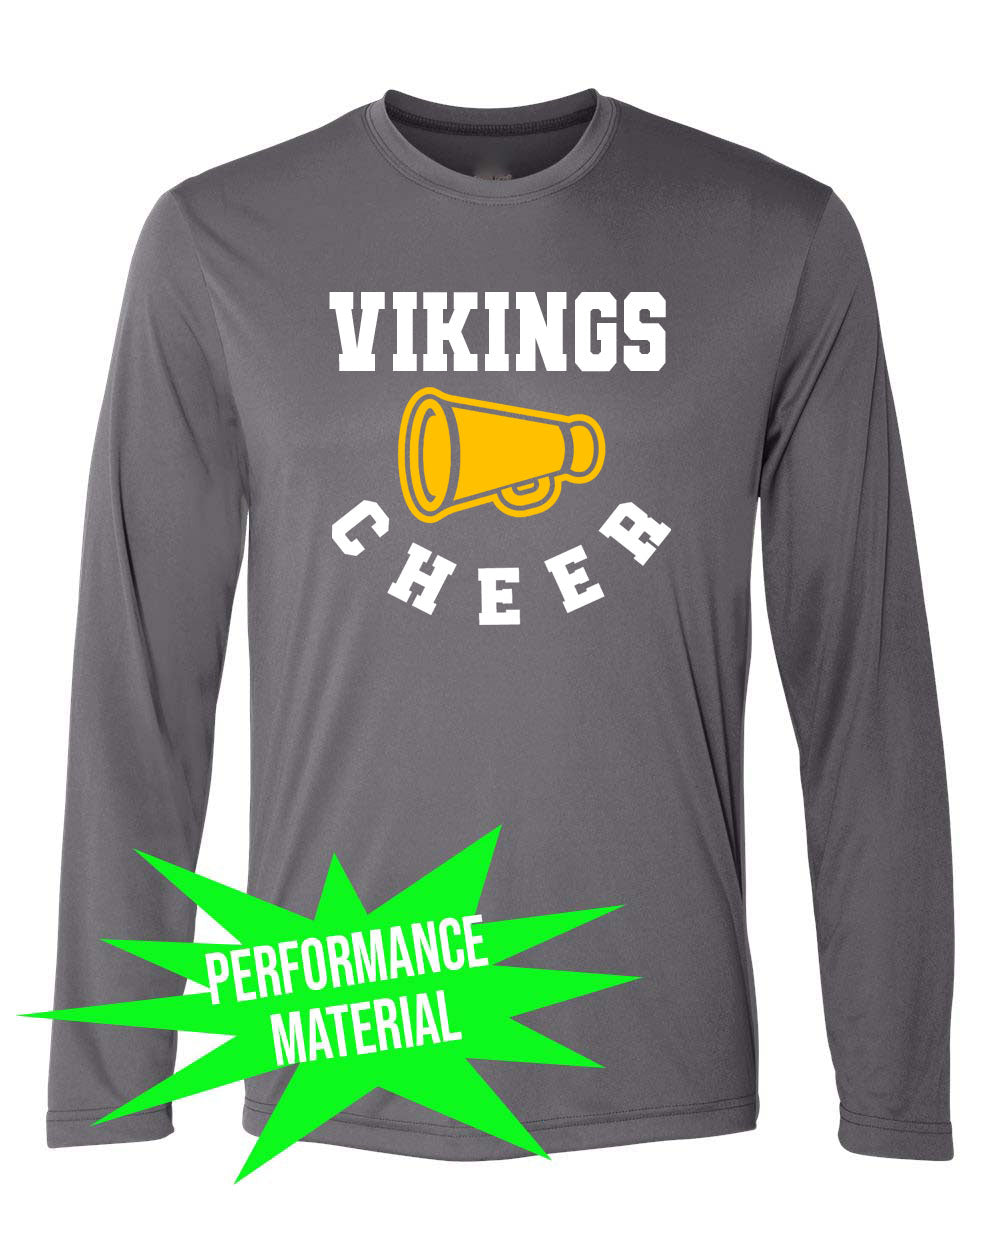 Vernon Vikings Cheer Performance Material Long Sleeve Shirt Design 13